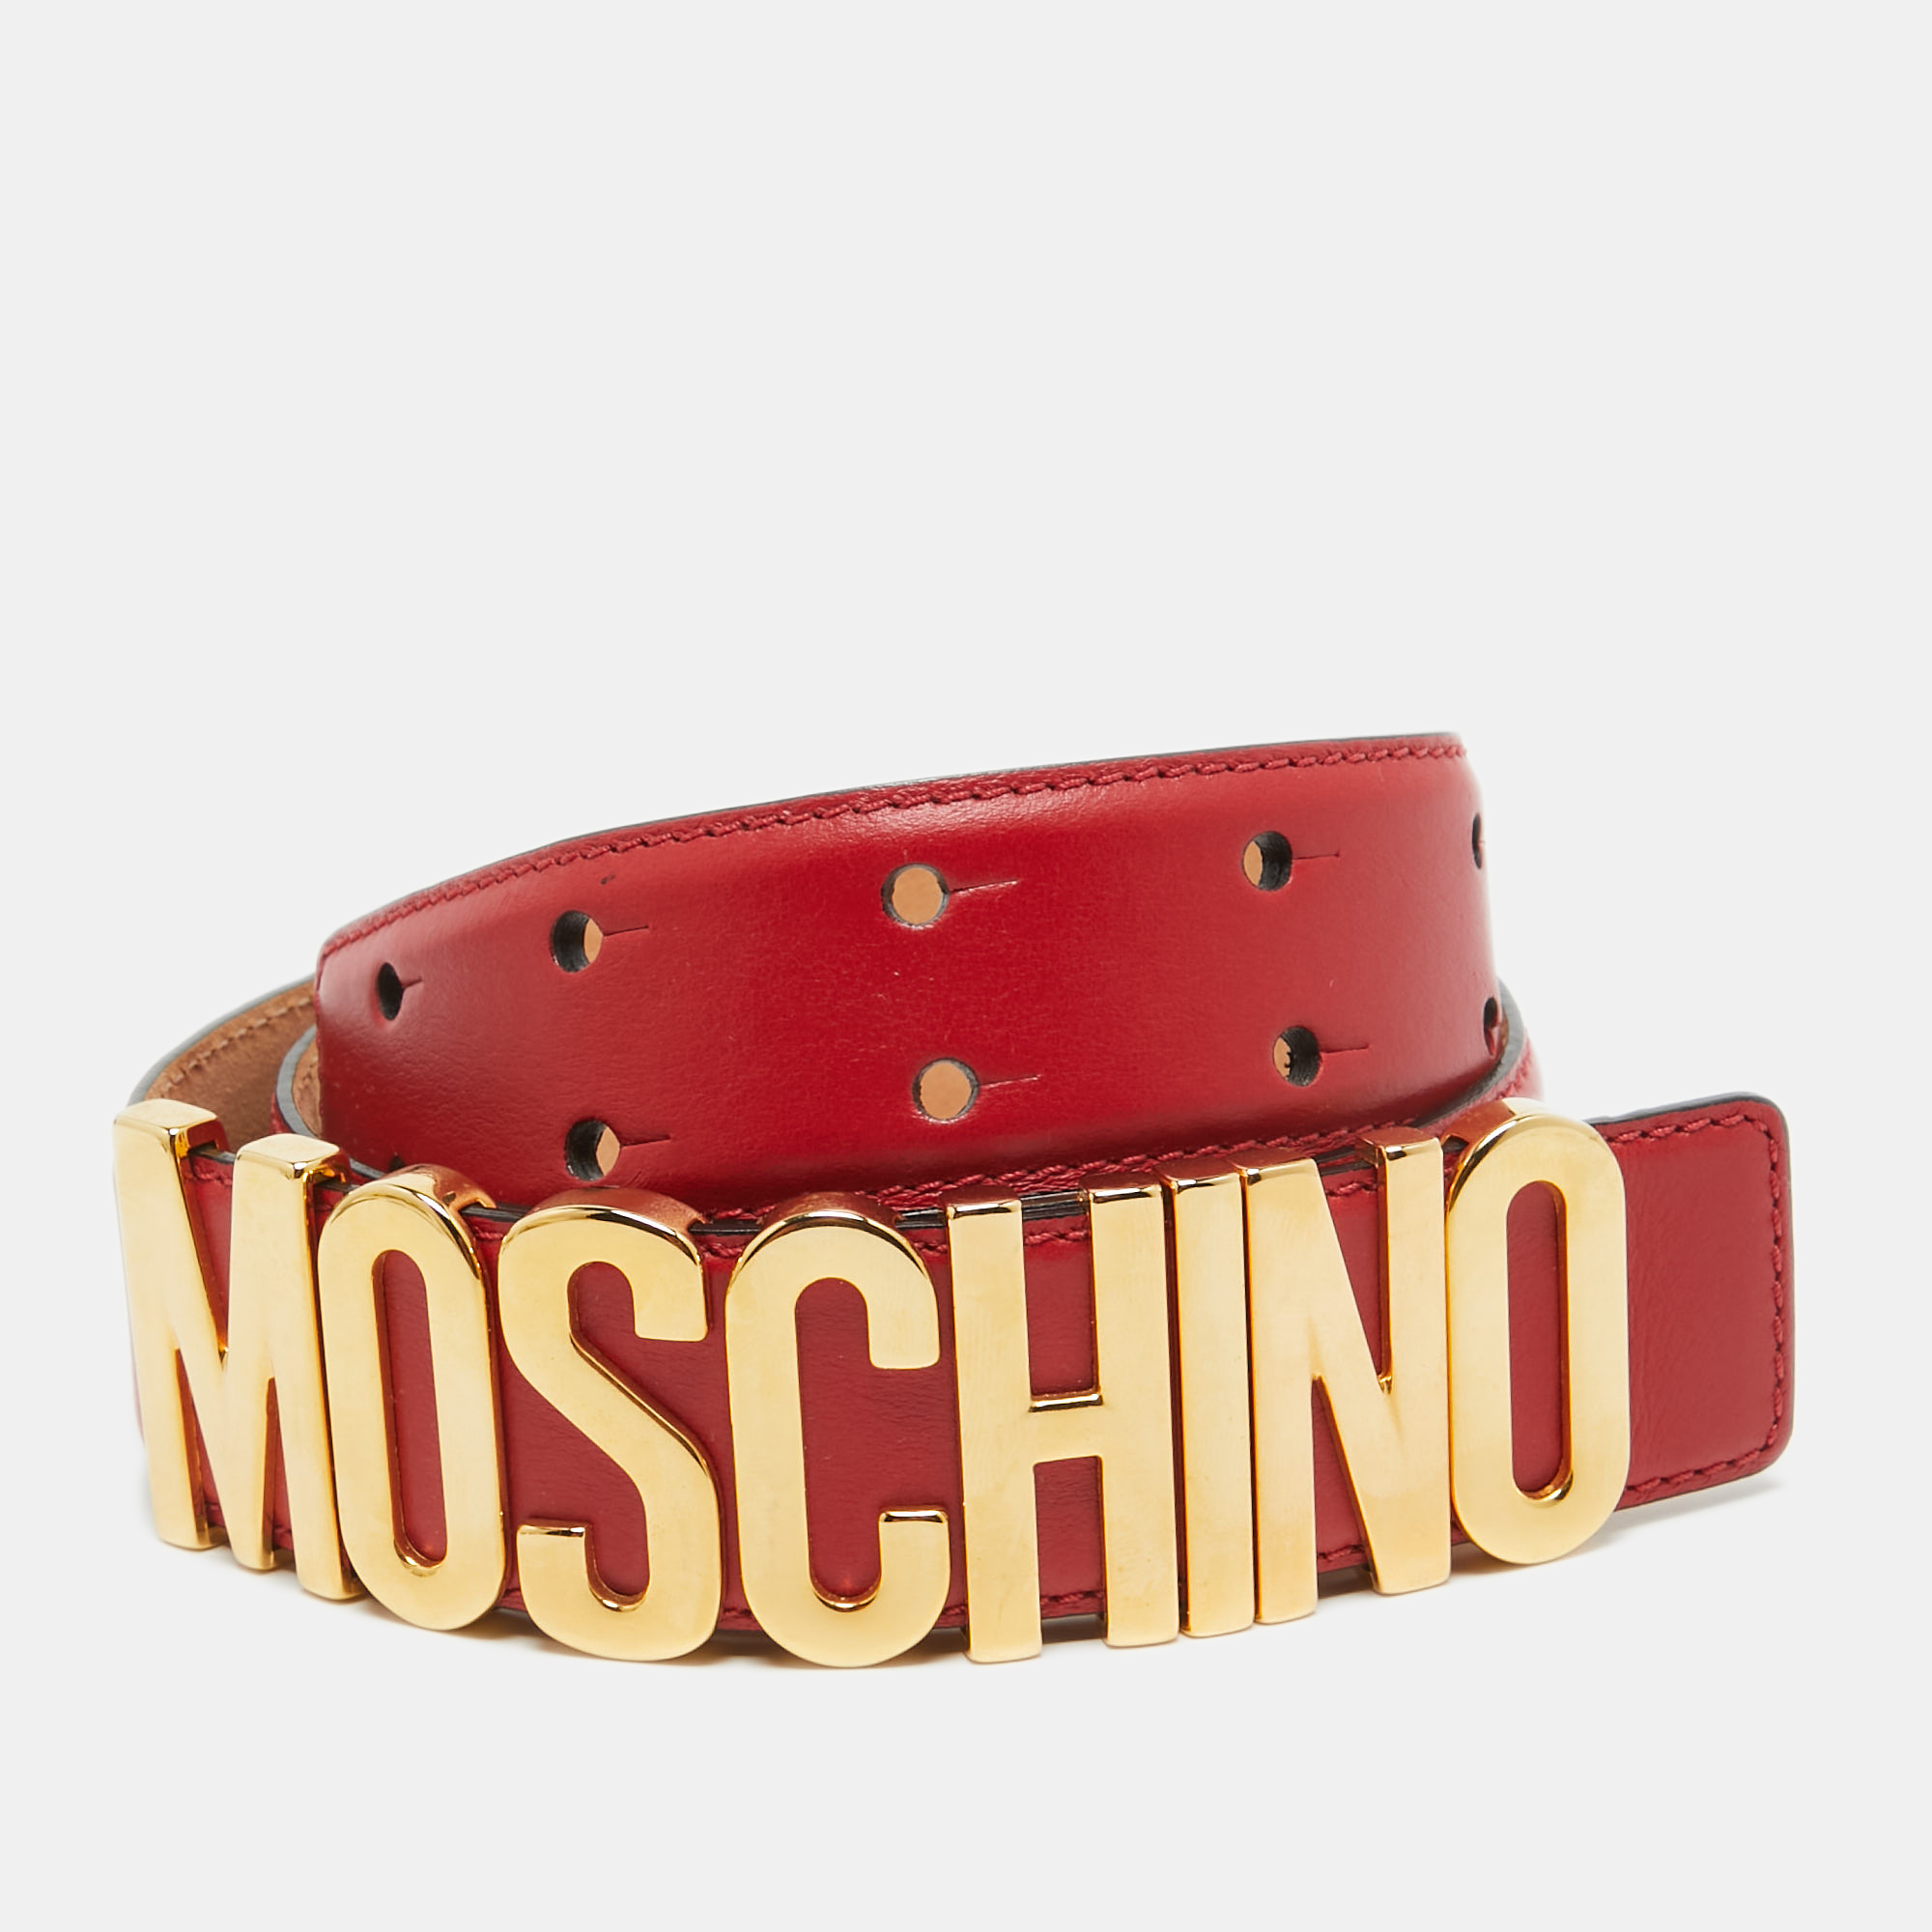 Moschino red leather classic logo waist belt